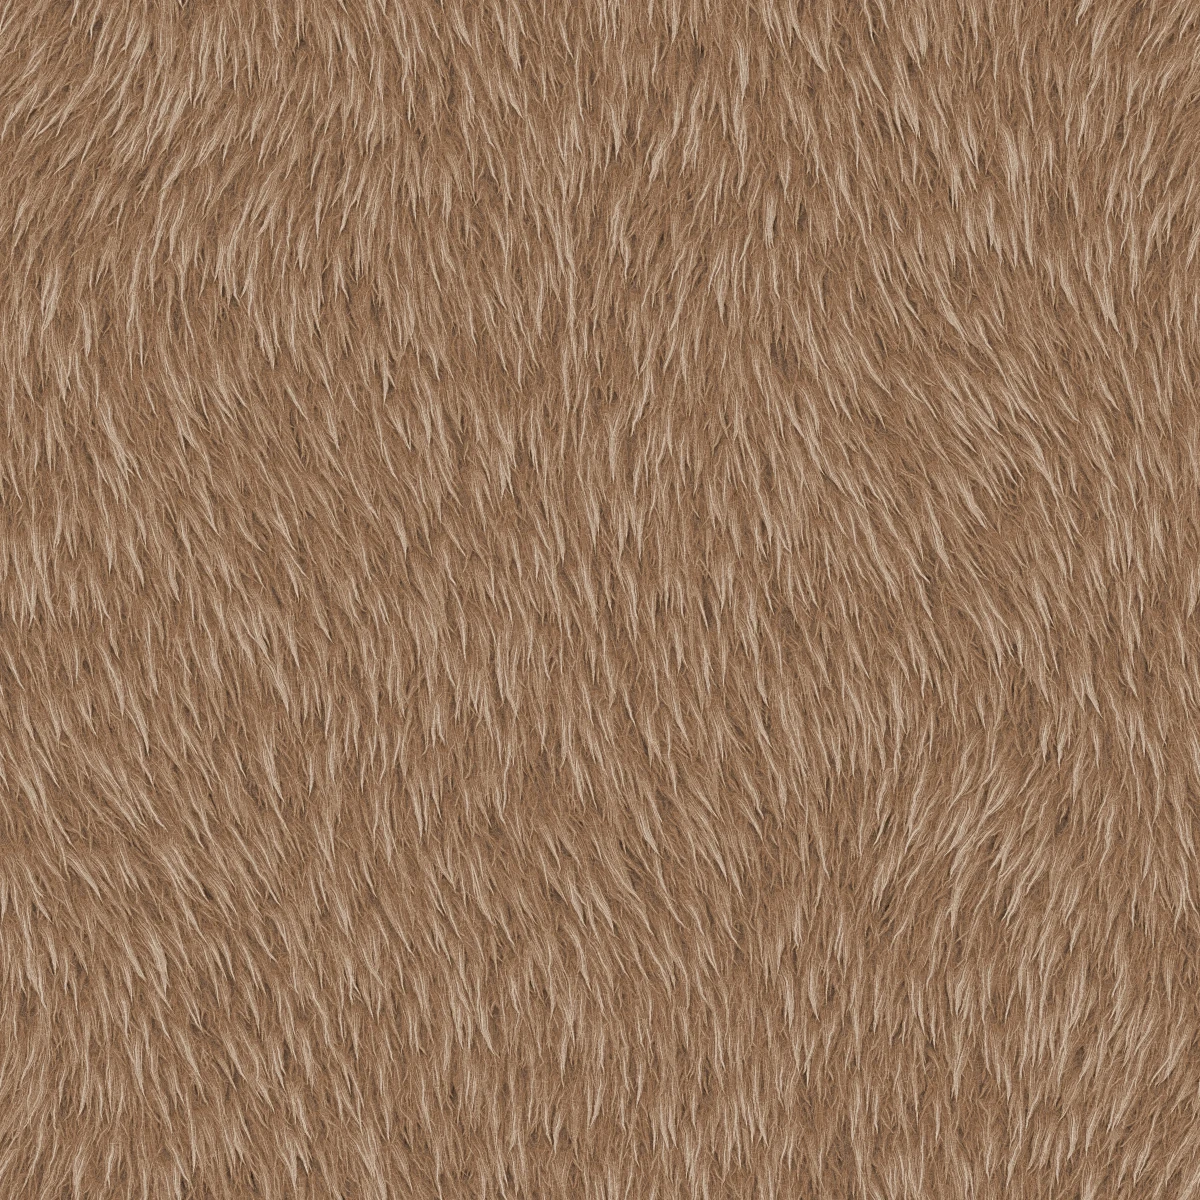 Brown Fur Fabric PBR Texture